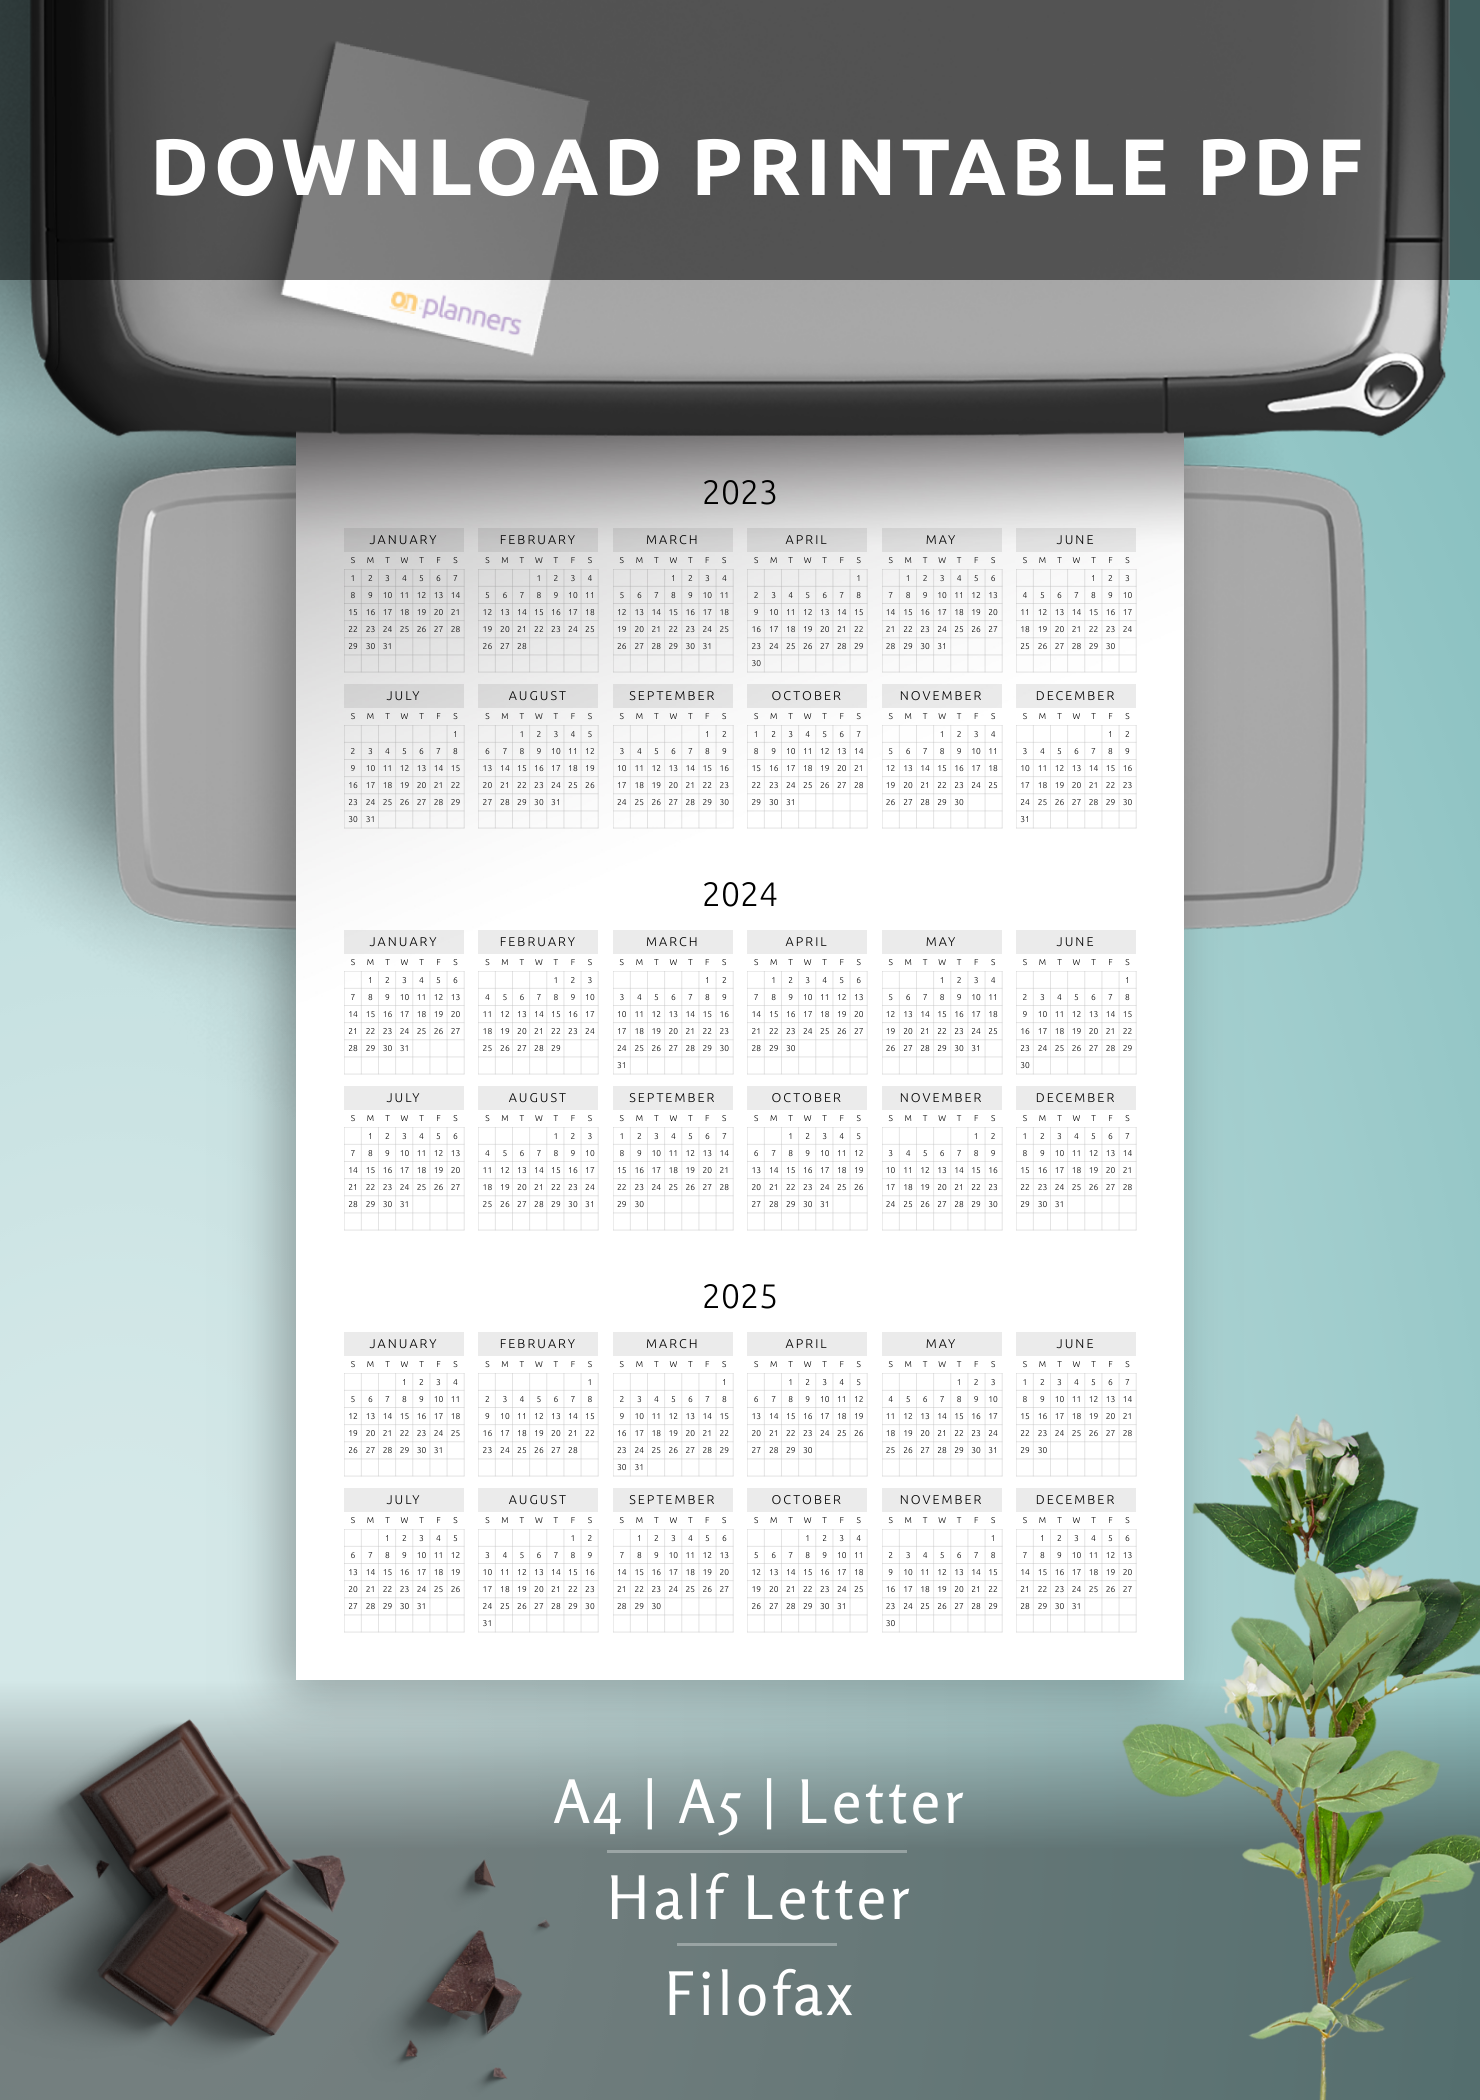 download-printable-3-year-calendar-template-original-style-pdf